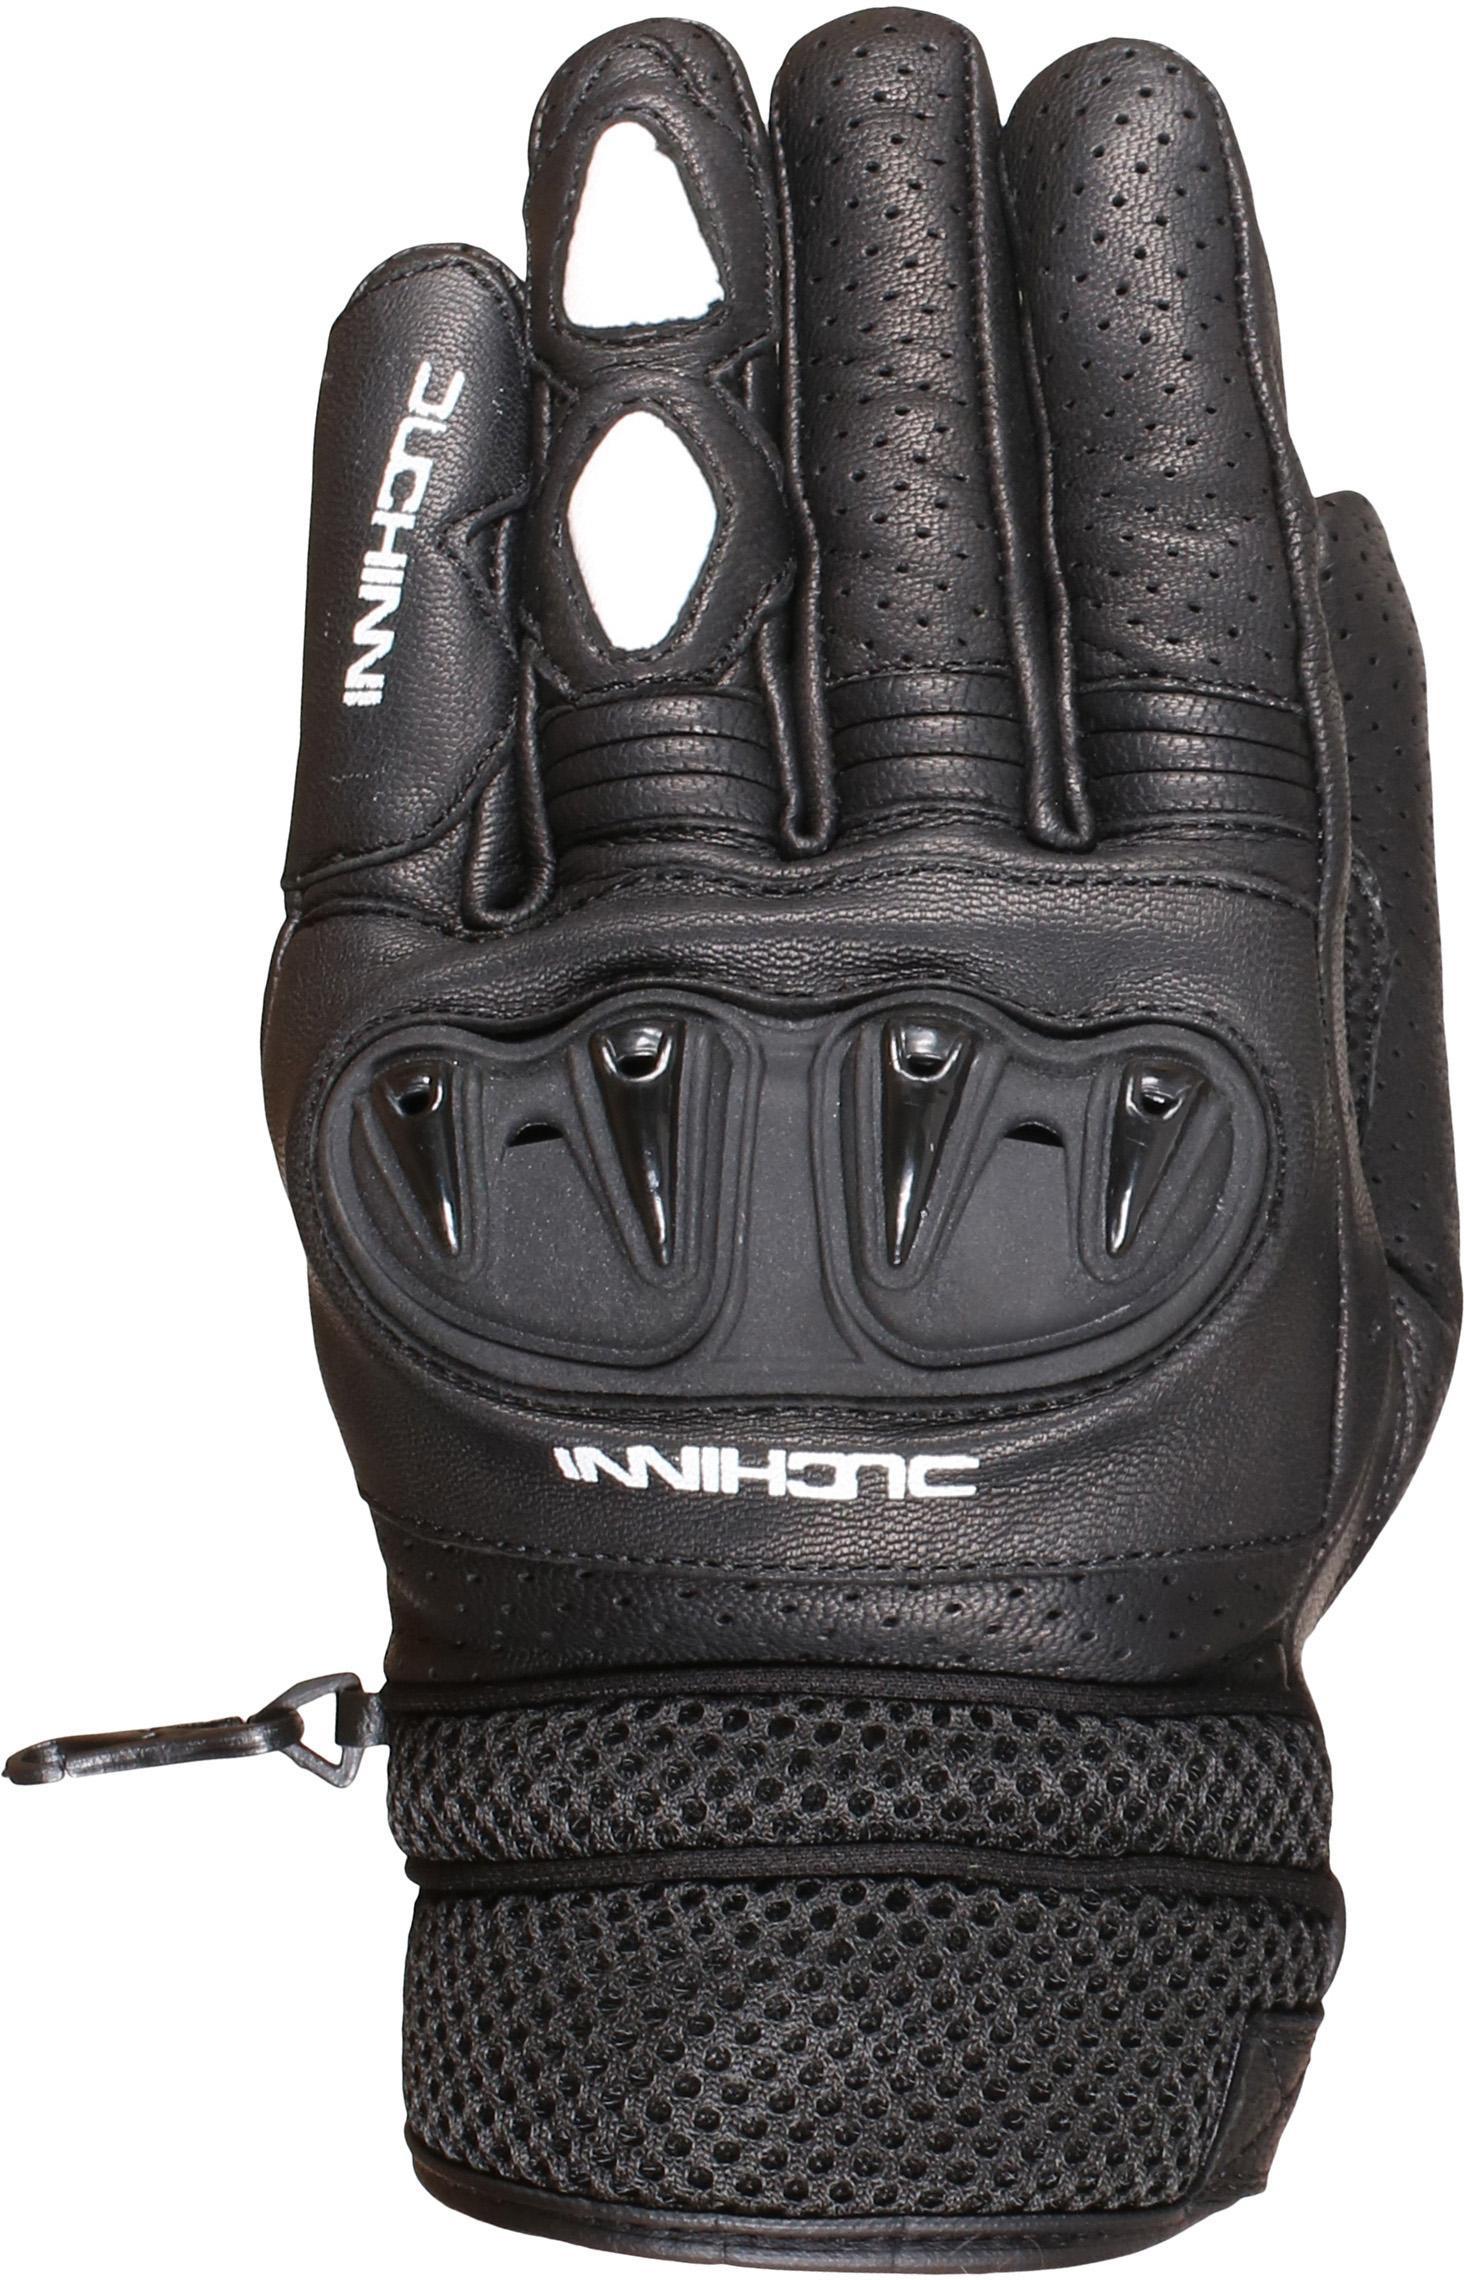 Duchinni Ostro Motorcycle Gloves - Black, Xl